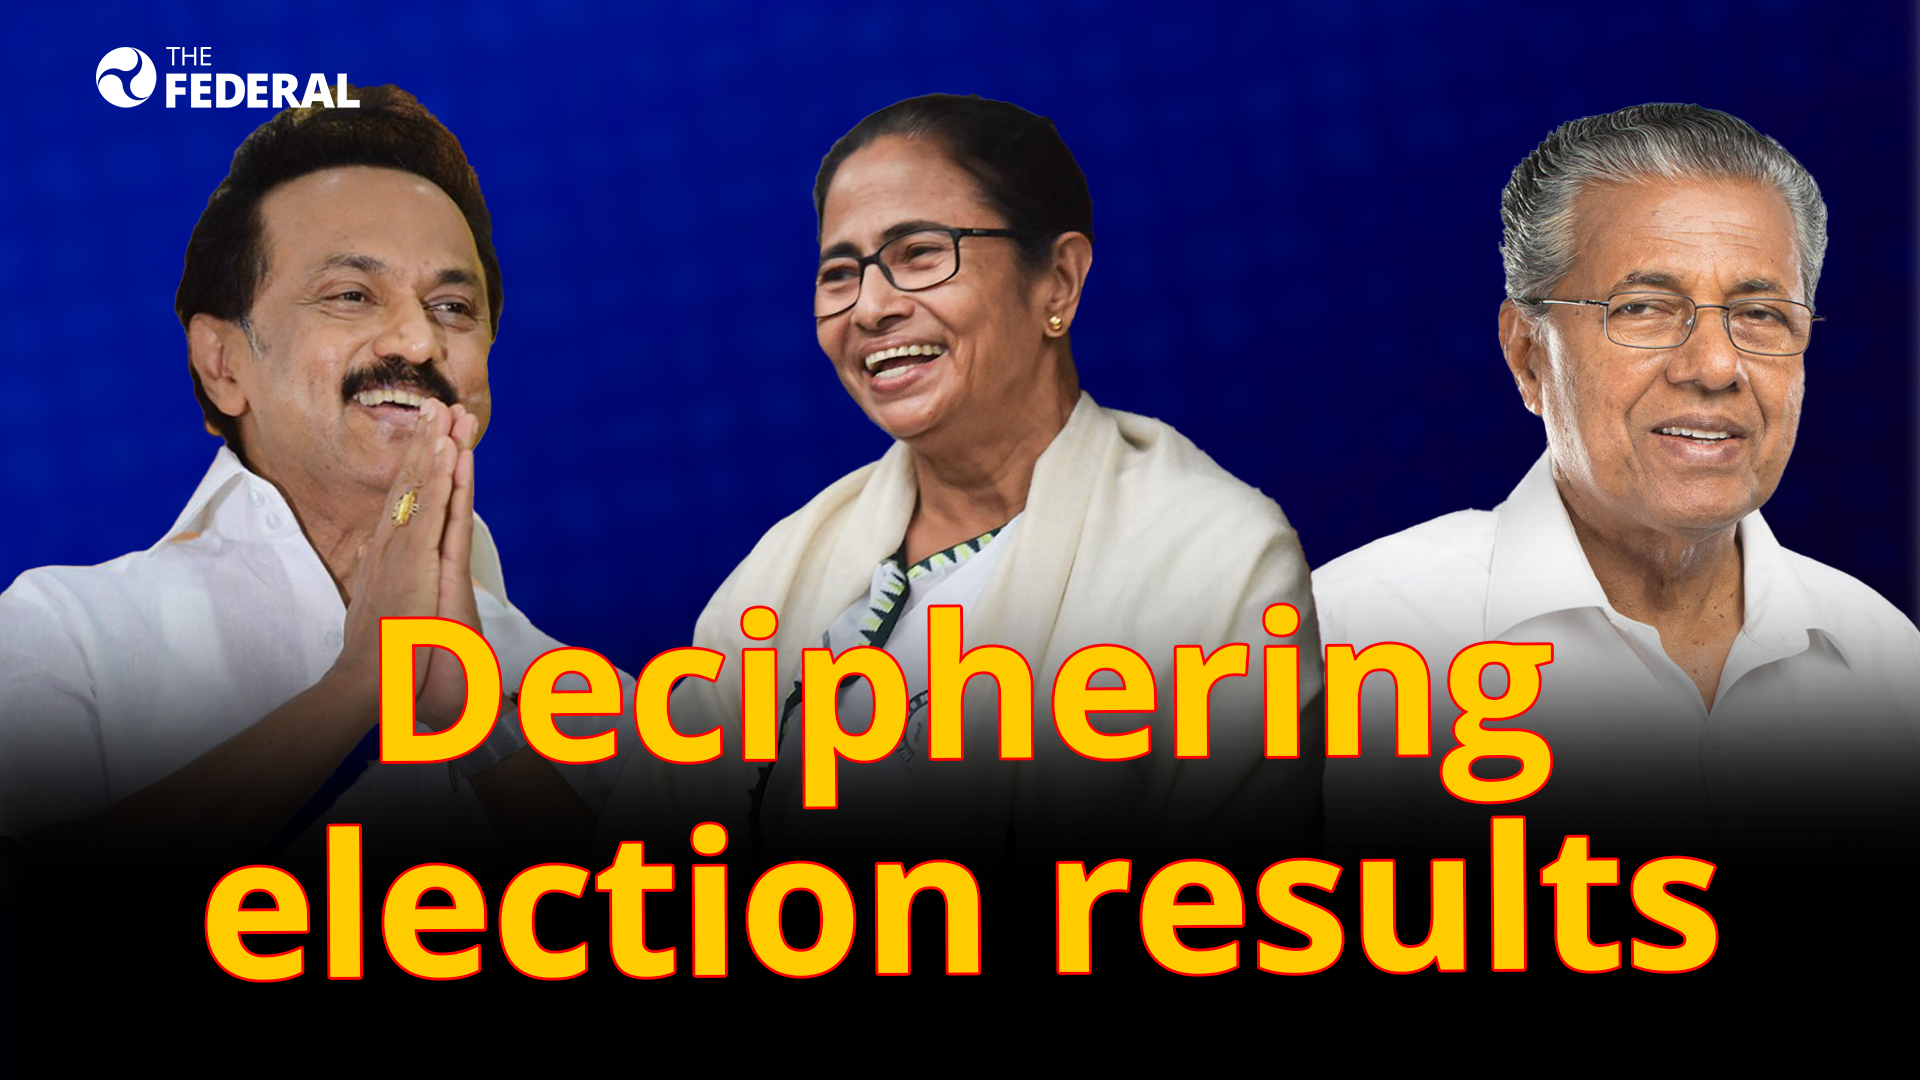 Debate Deciphering election results